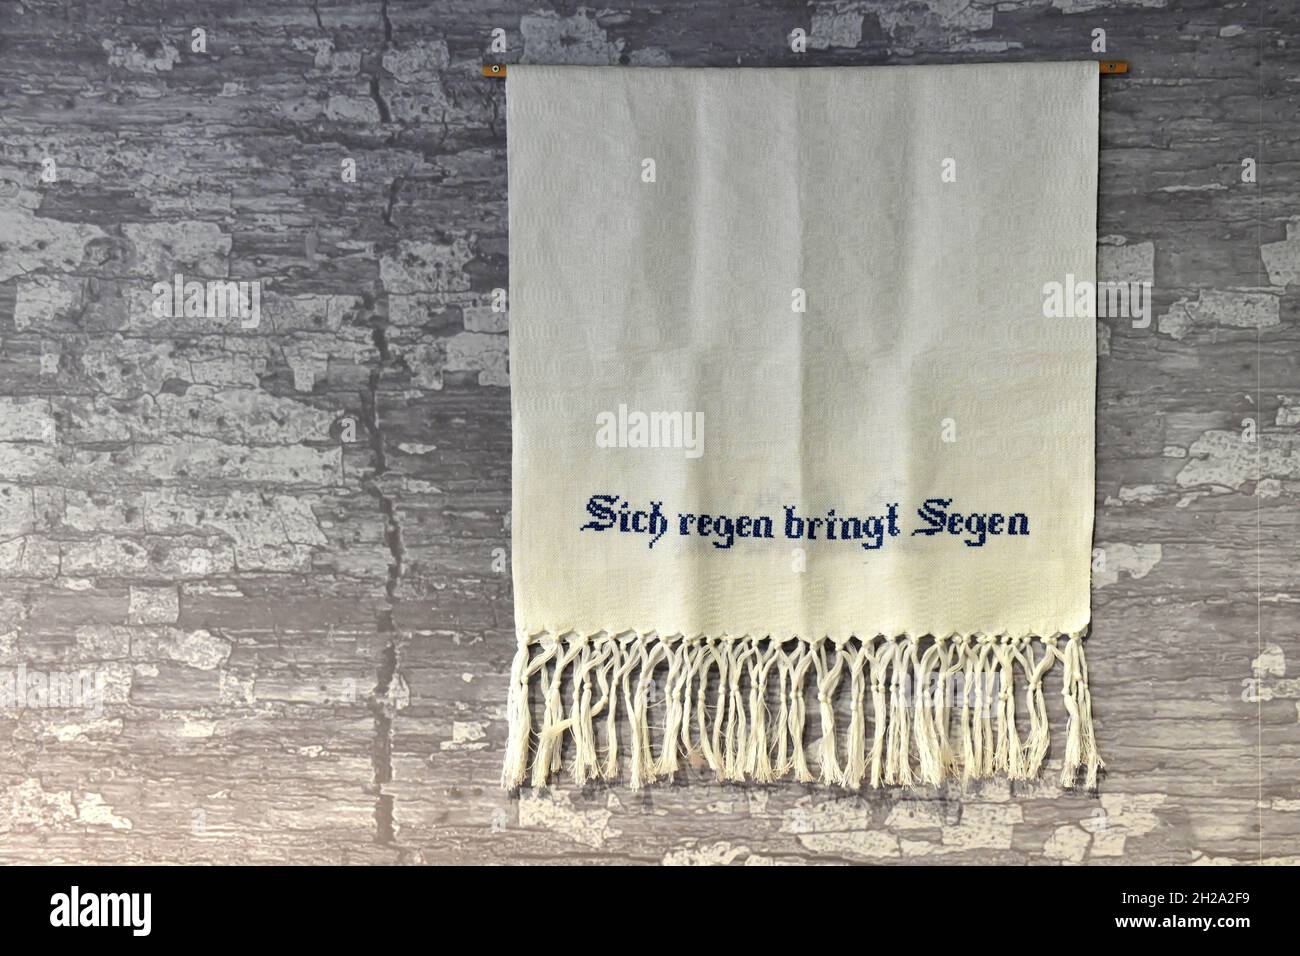 Tuch 'Sich regen bringt Segen' im Museum Arbeitswelt in Steyr, Österreich, Europa - Cloth 'Movement brings blessings' Museum for the world of working Stock Photo